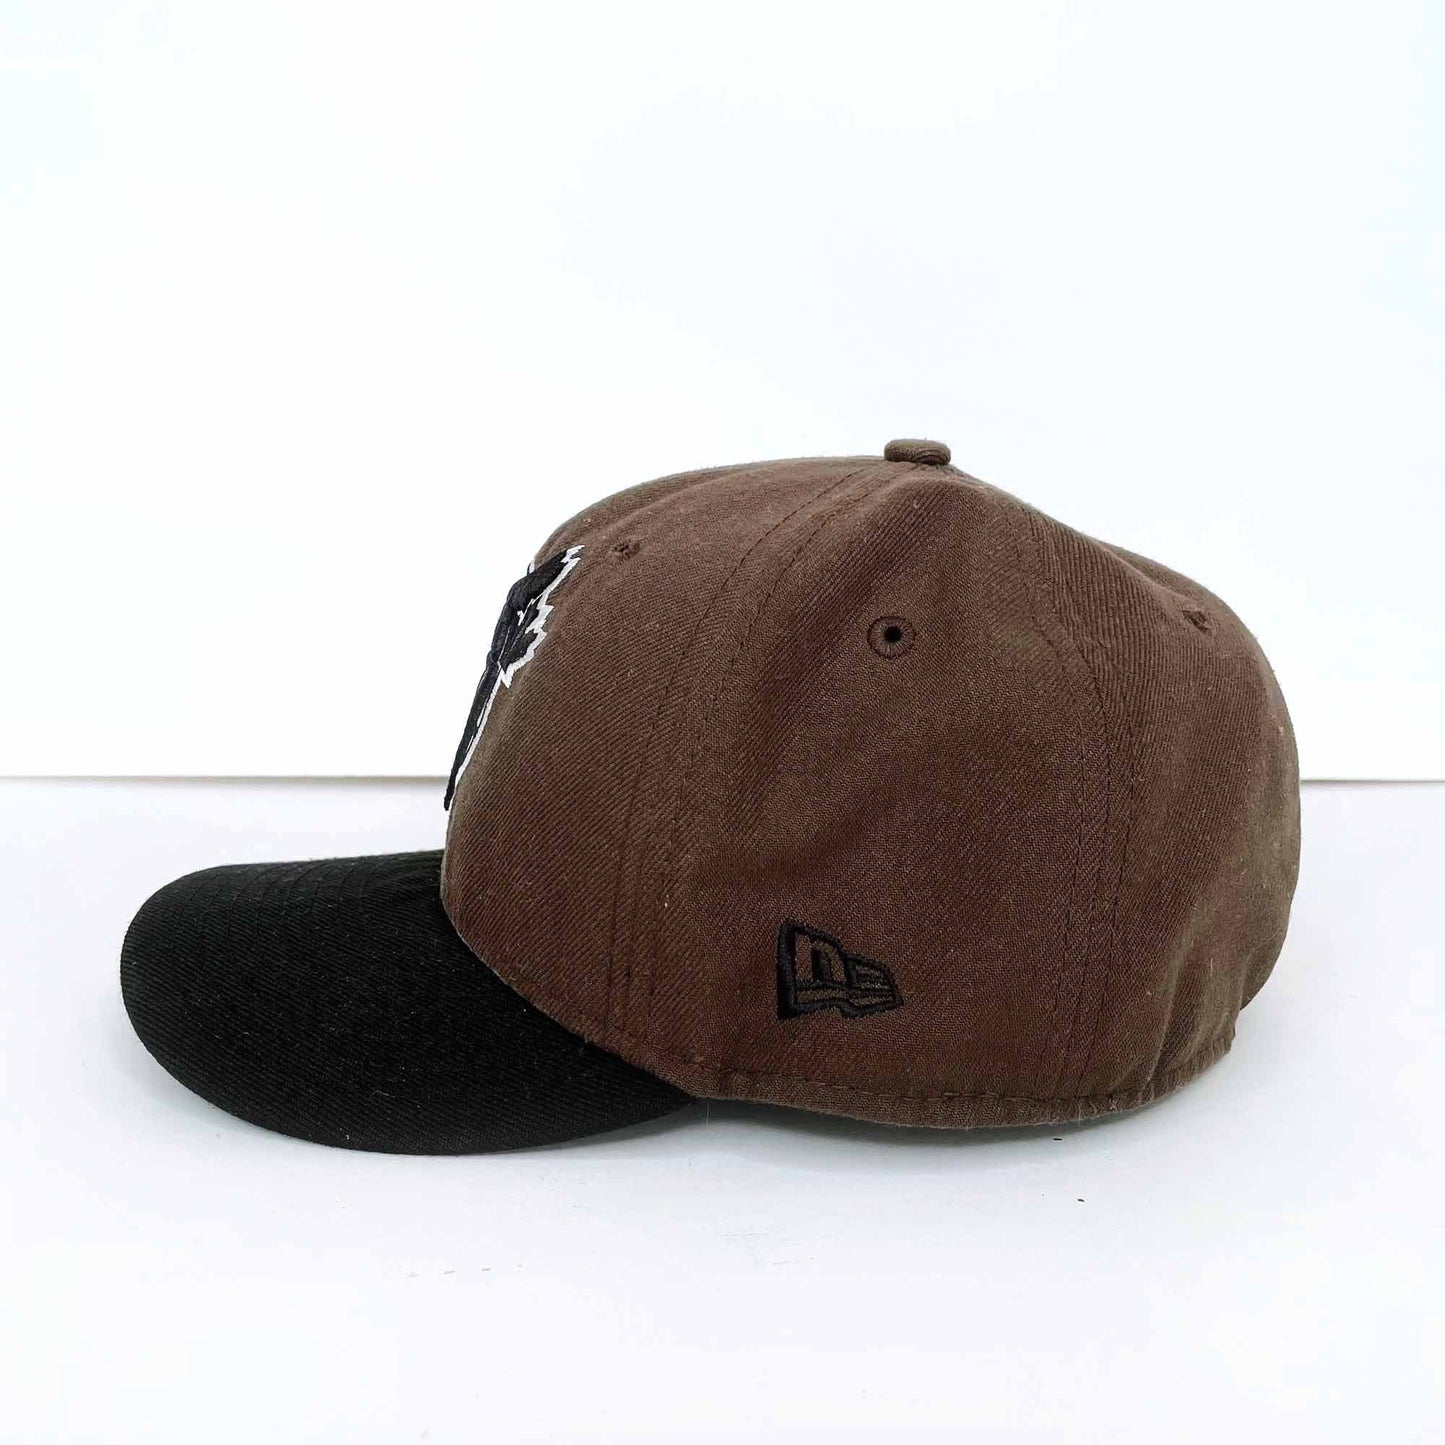 jays new era brown black colourway fullback hat - size 7 1/8